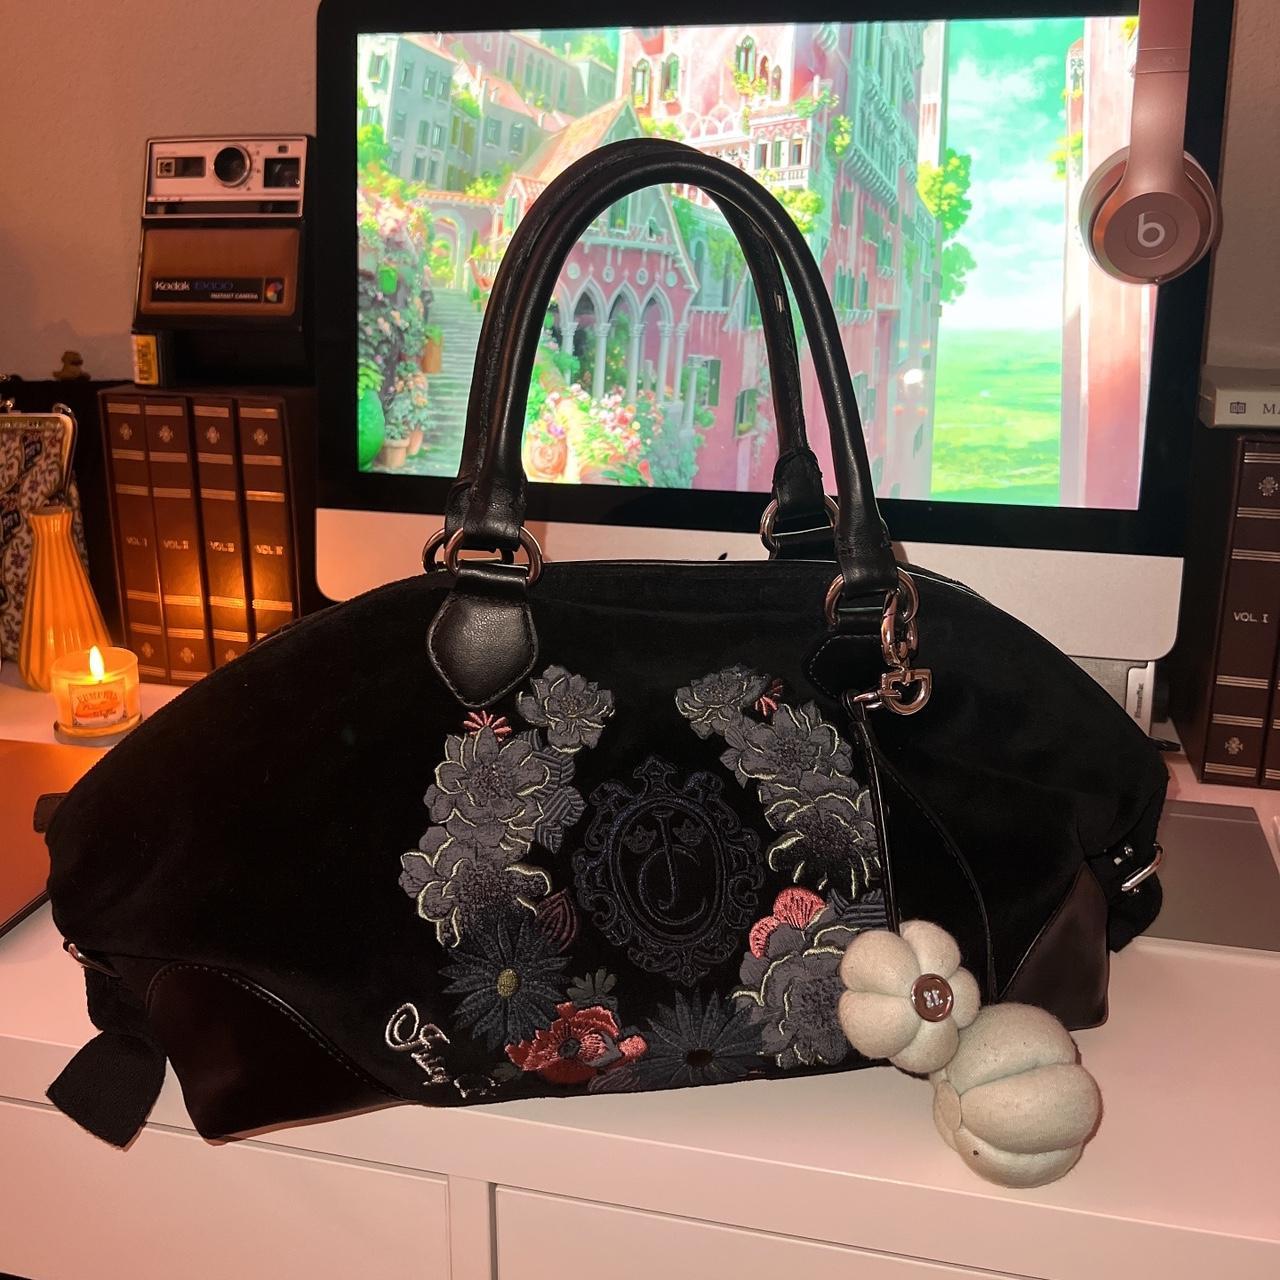 Vintage Juicy Couture Bag | Juicy couture handbags, Juicy couture bags, Bags